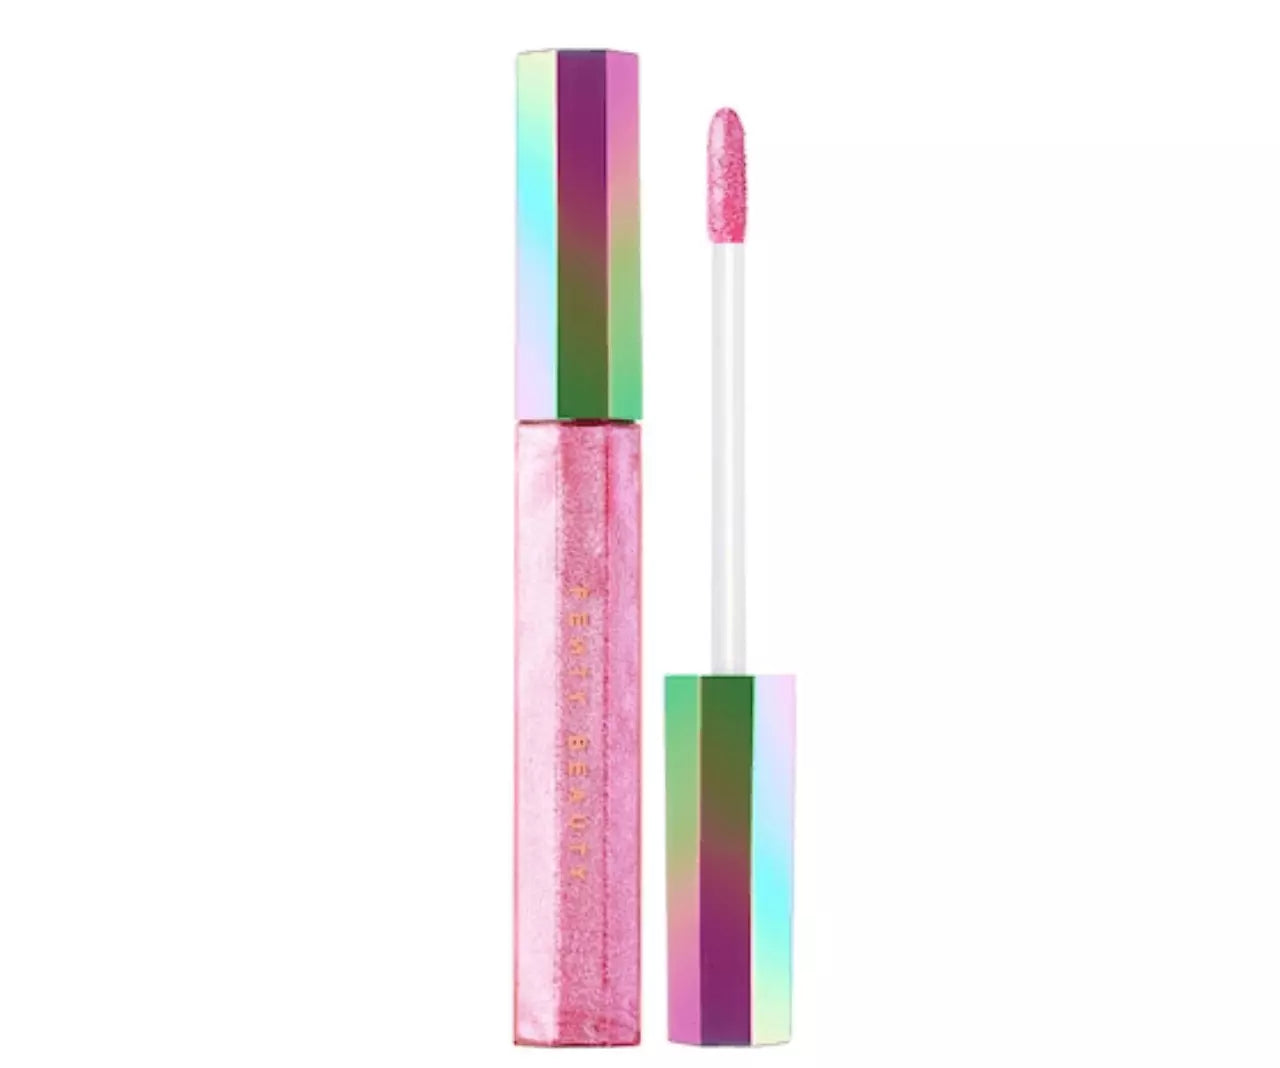 Fenty Beauty by Rihanna Cosmic Gloss Lip Glitter in Plutonic Relationship (Limited Edition)